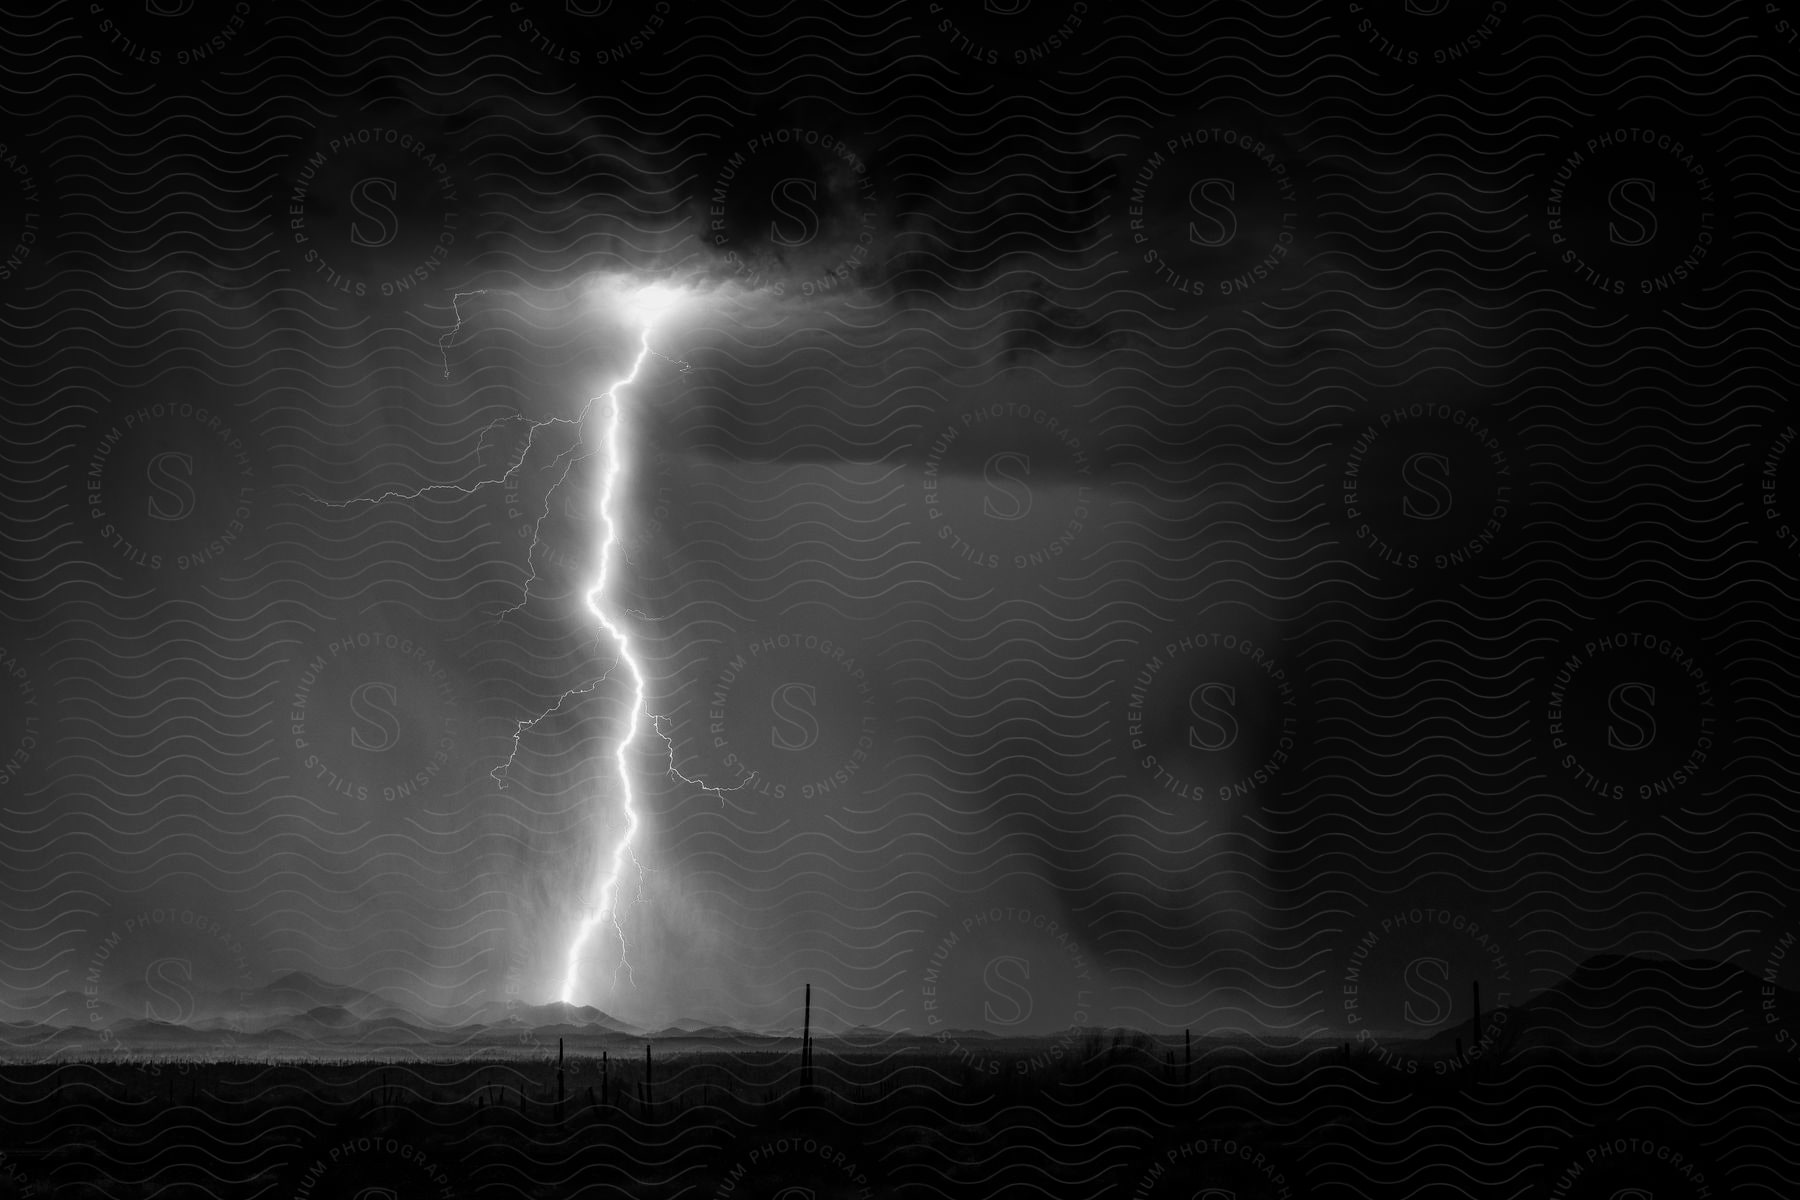 A lightning bolt strikes near mountains in a stormy sky